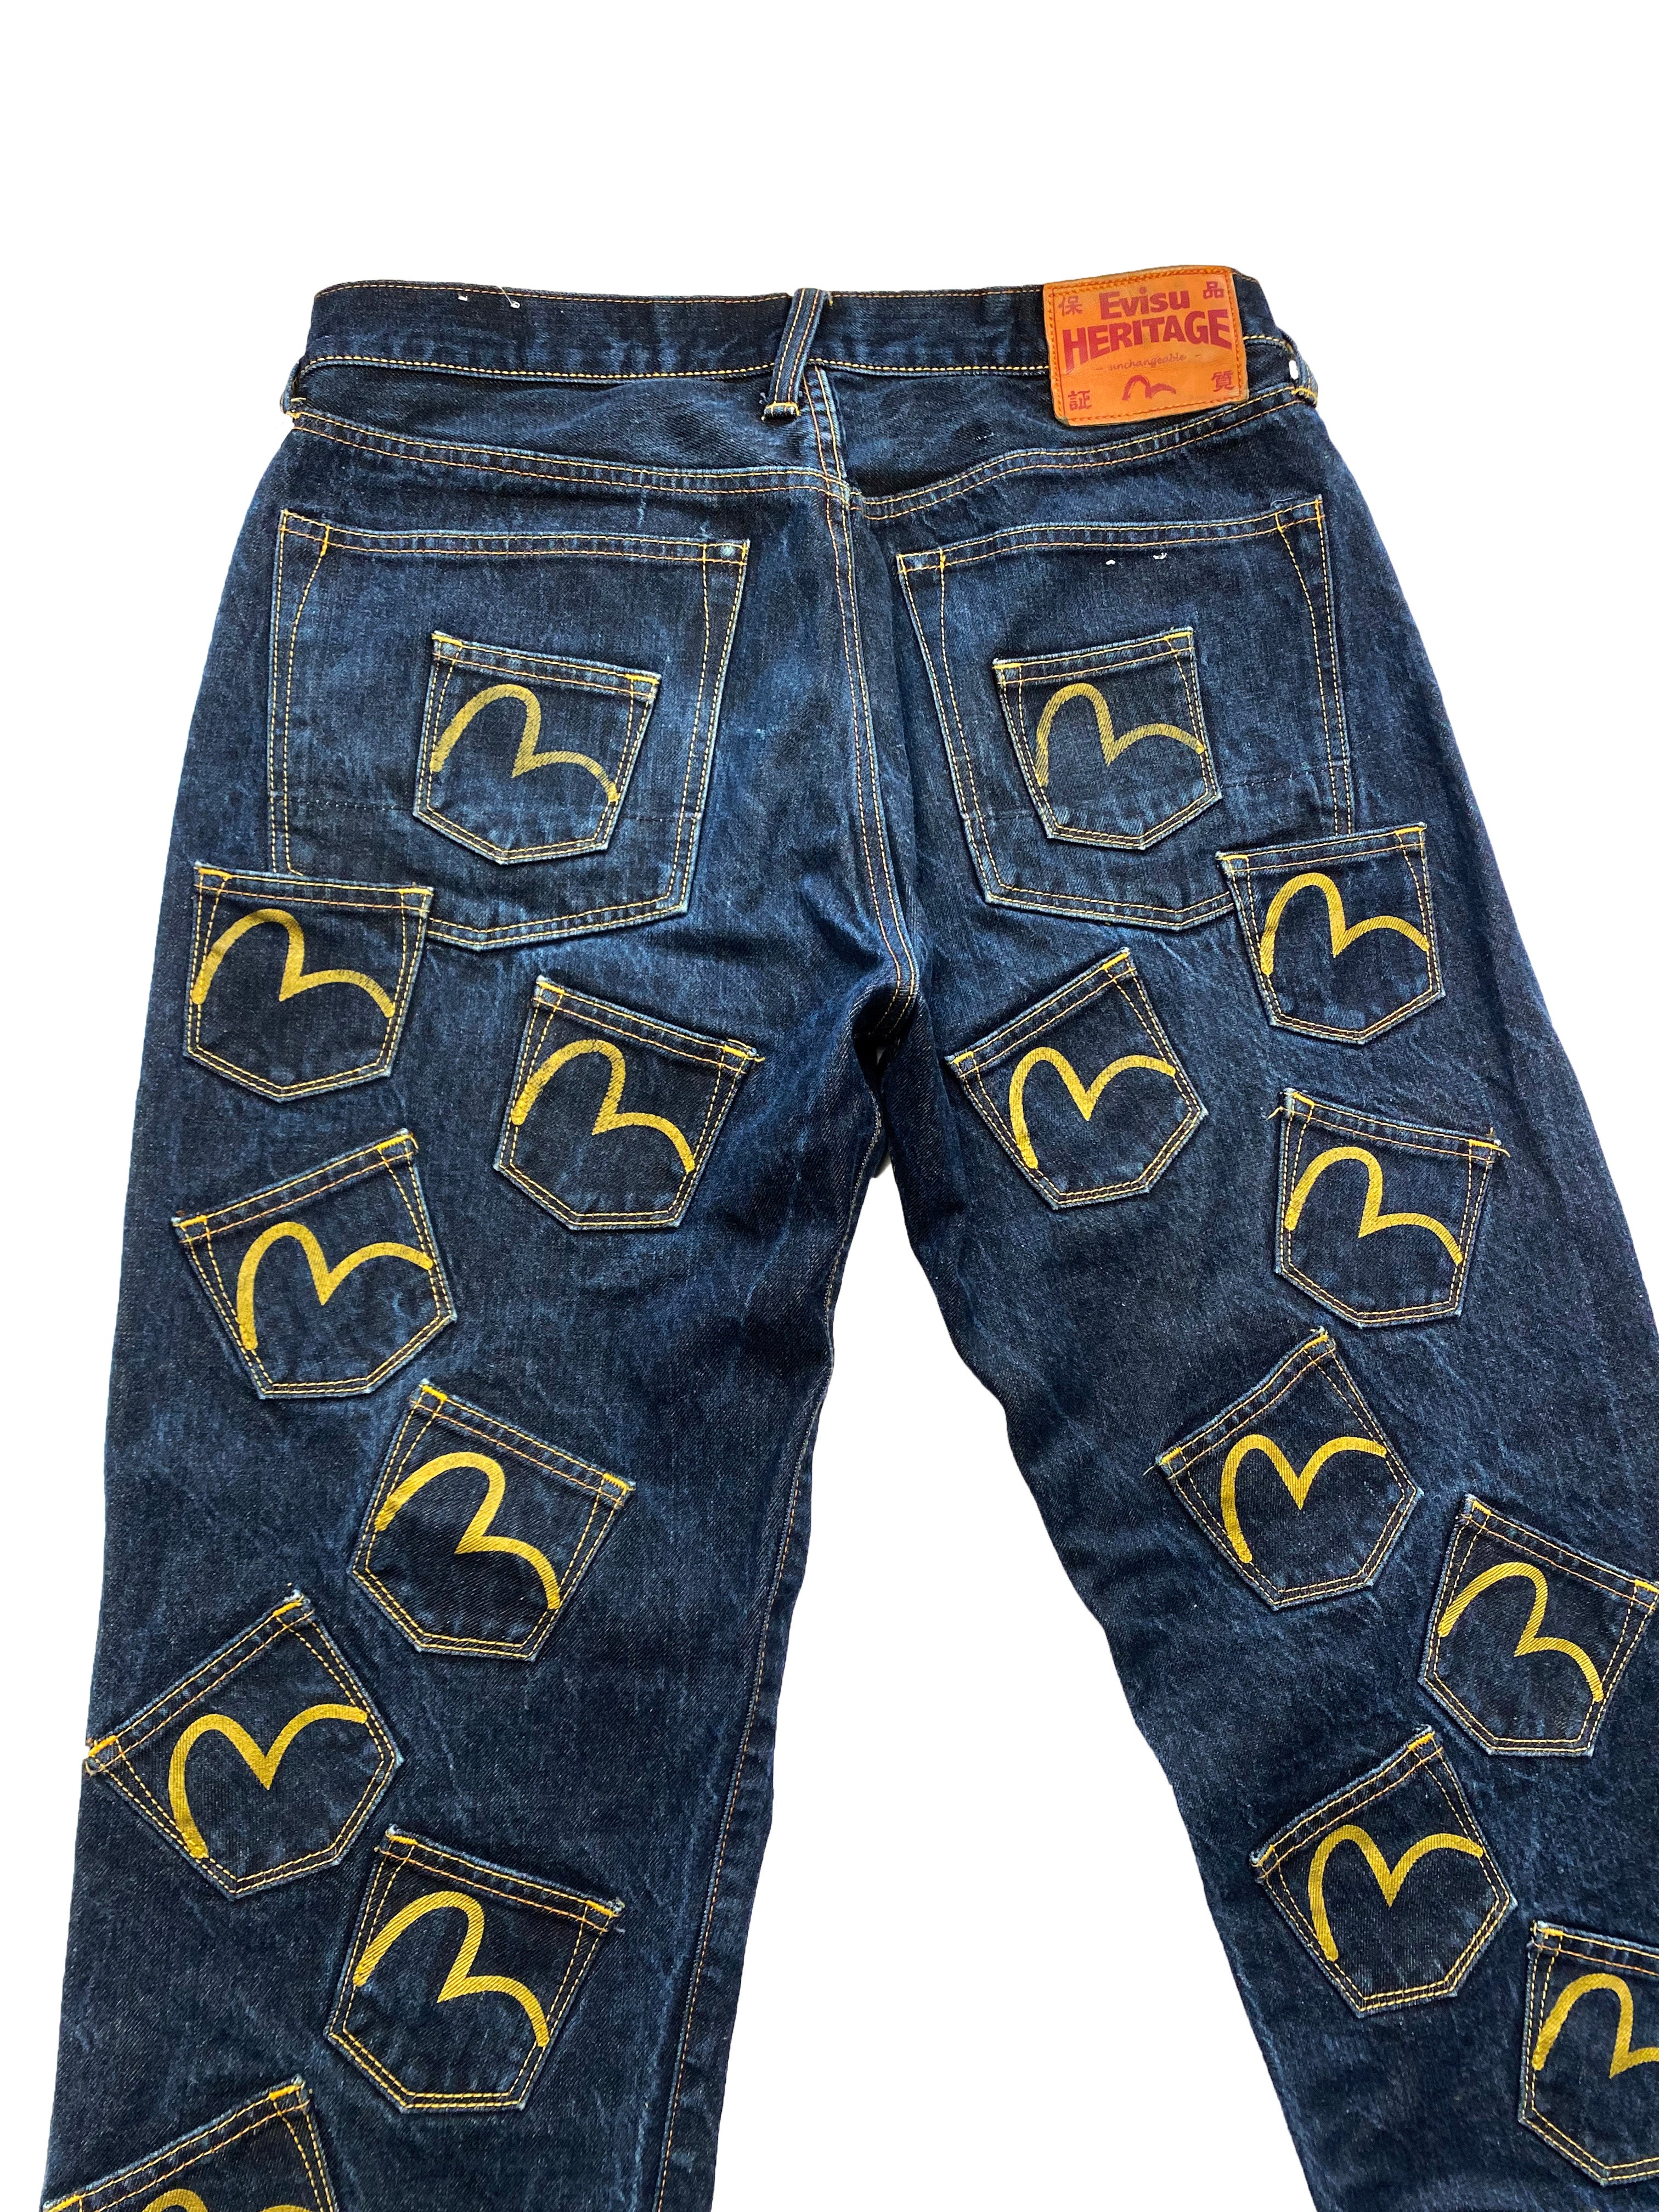 Evisu Multi Pocket Gold Gull Jeans 00's